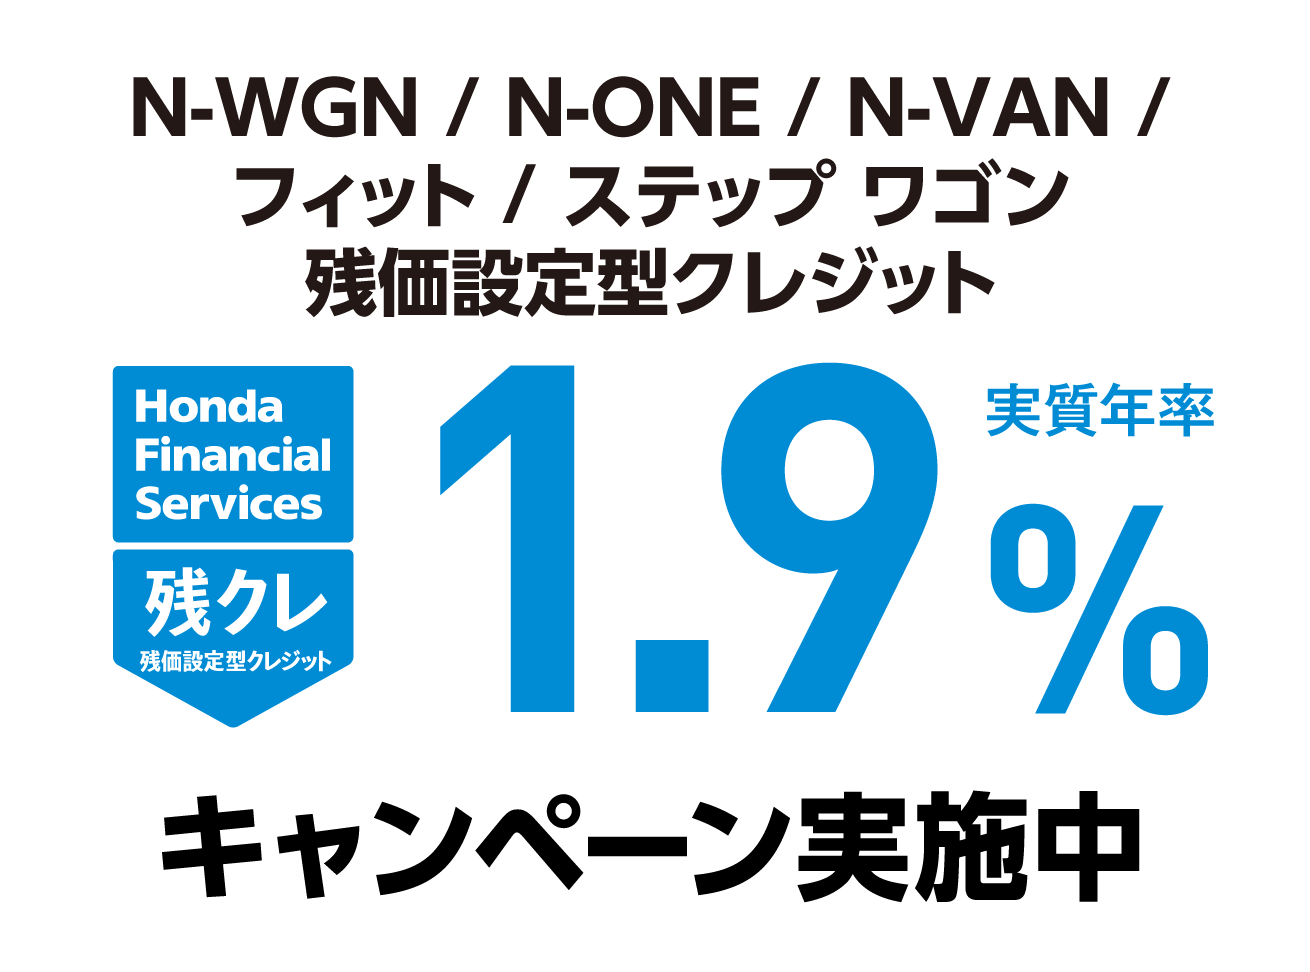 http://N-WGN/N-ONE/N-VAN/フィット/ステップ%20ワゴン%20%20残価設定型クレジット%201.9%キャンペーン実施中